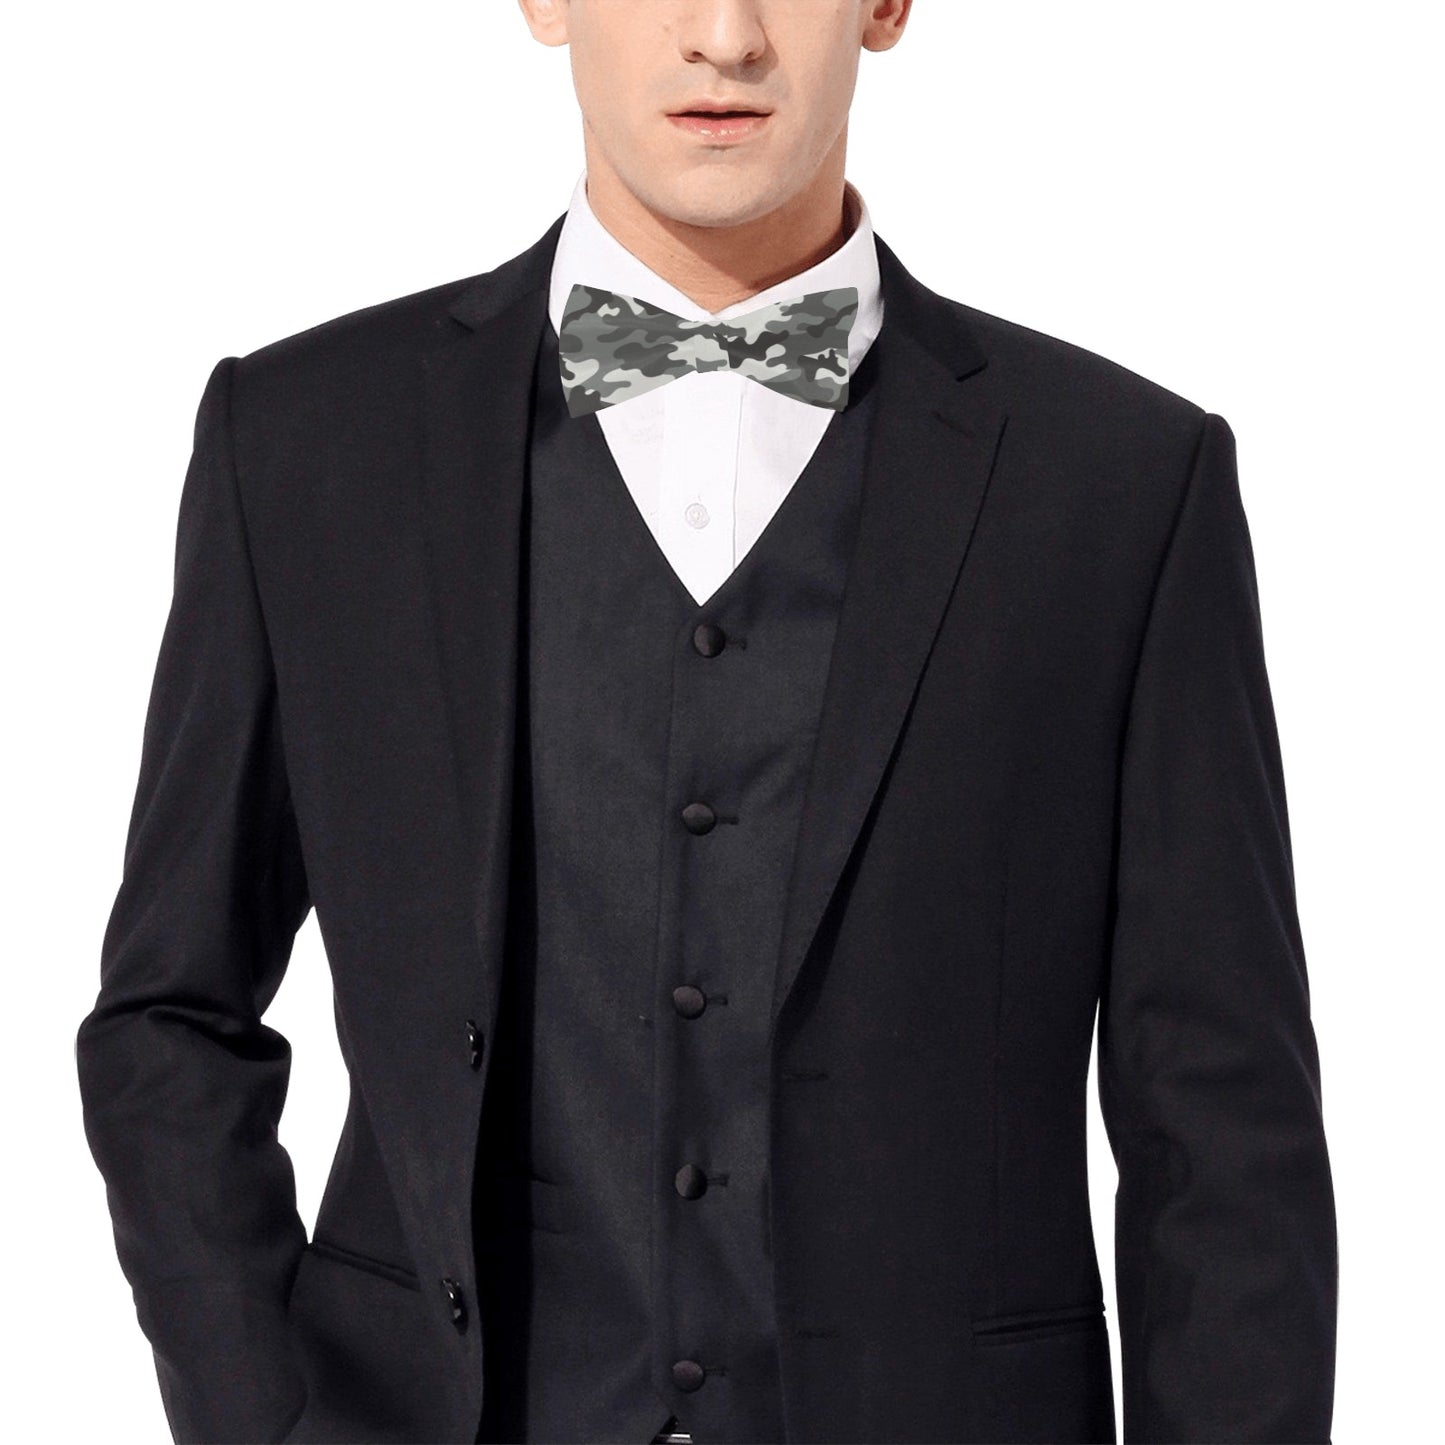 Camo Bow Tie, Grey Camouflage Army Classic Chic Adjustable Pre Tied Bowtie Gift Him Men Tuxedo Groomsmen Necktie Wedding Designer Suit